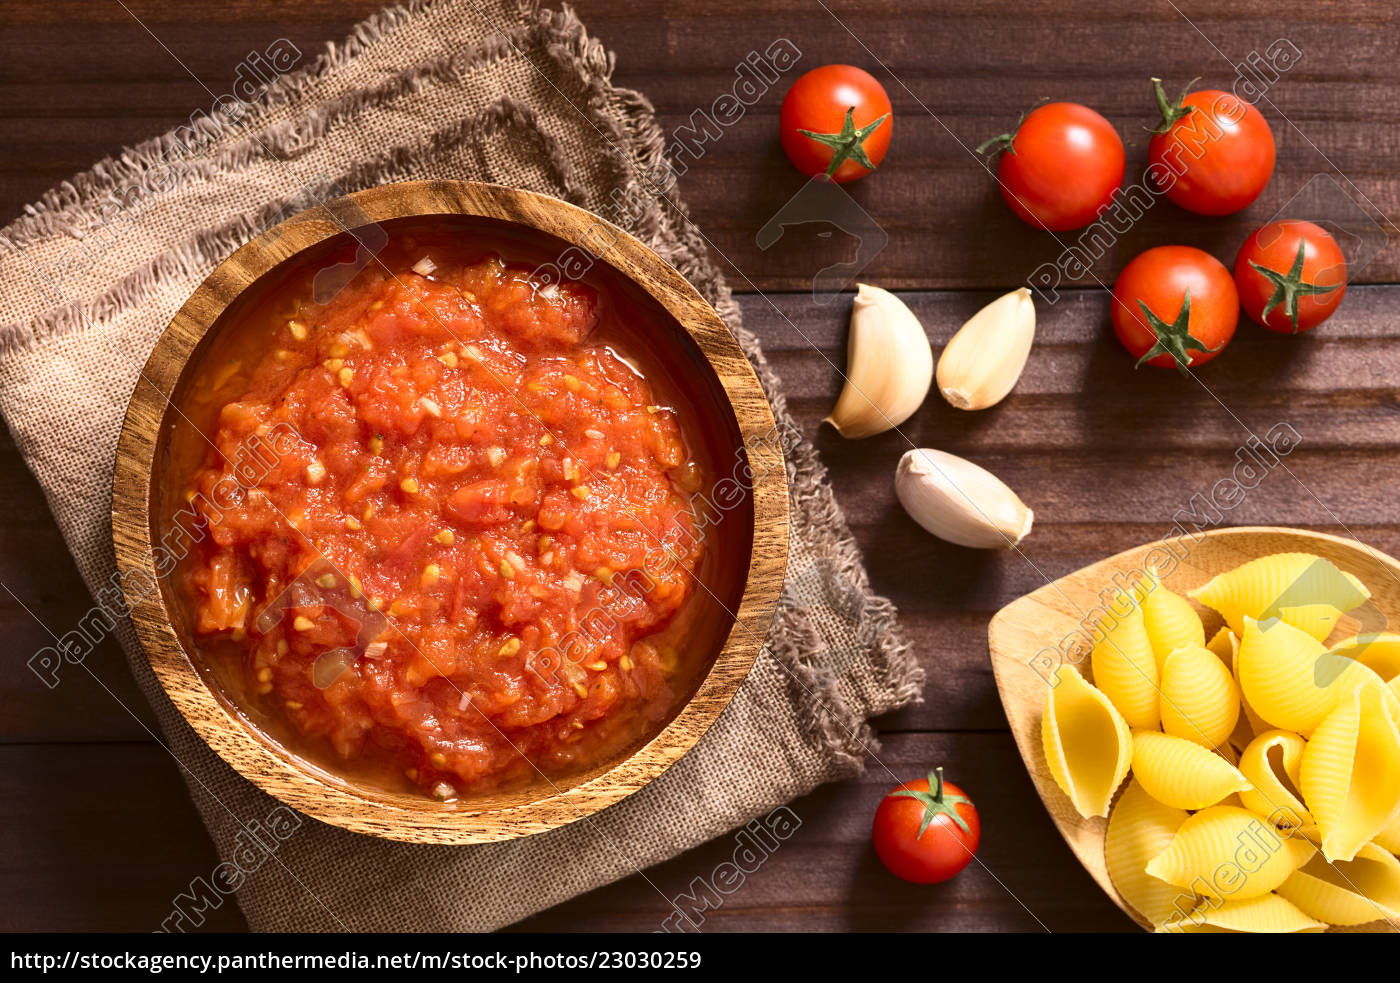 hausgemachte marinara oder pomodoro tomatensoße - Stockfoto - #23030259 ...